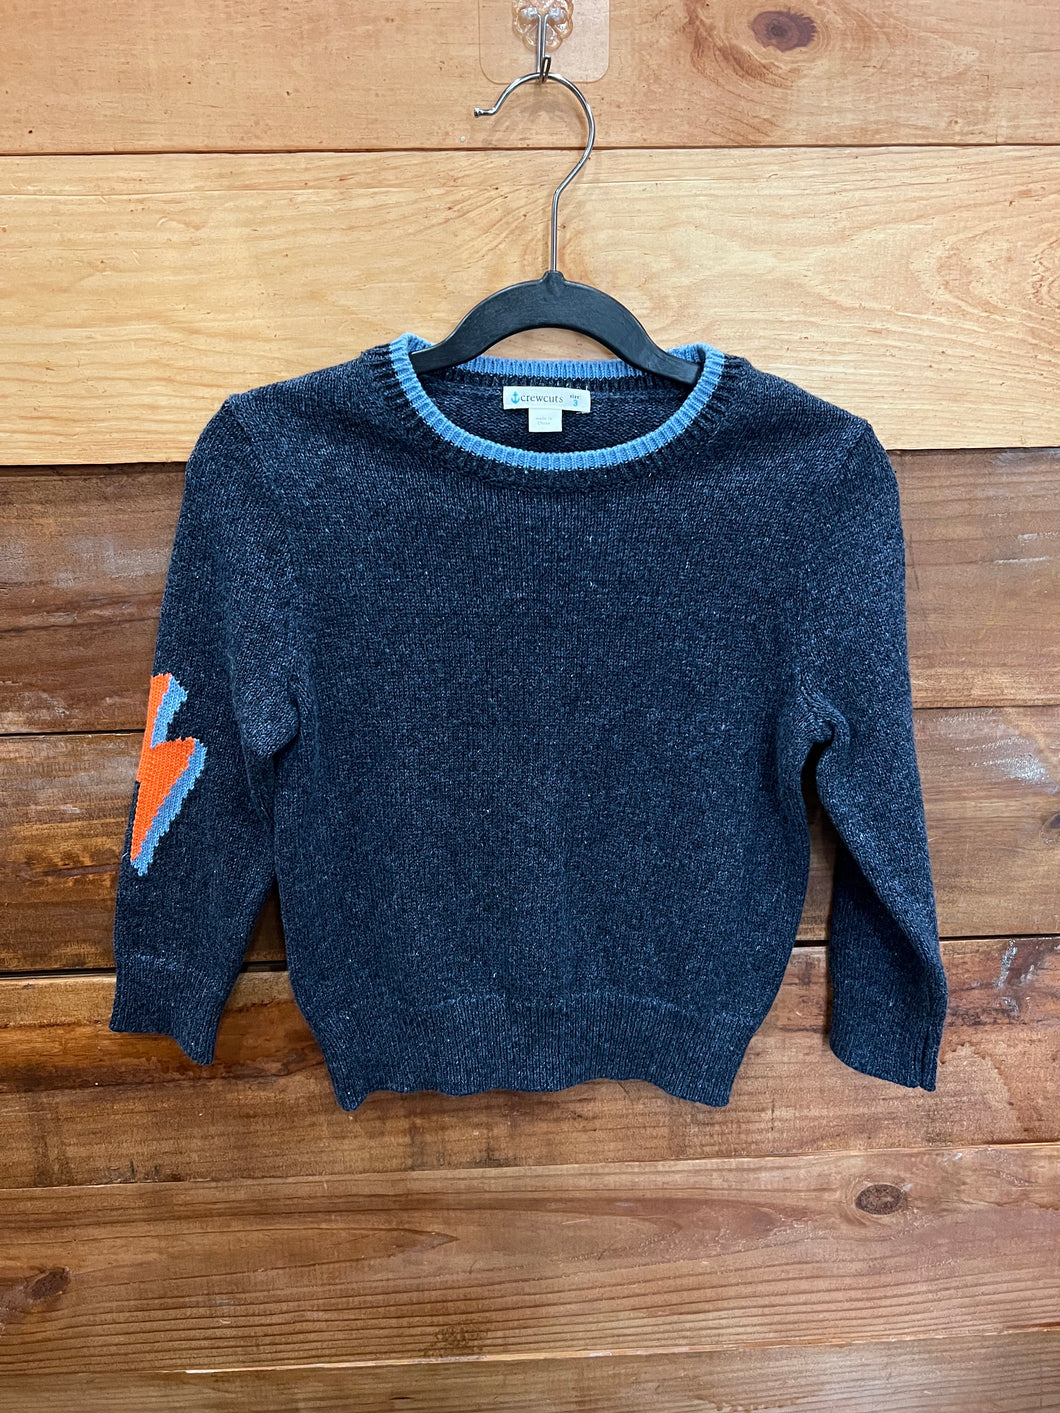 Crewcuts Blue Lightening Bolt Sweater Size 3